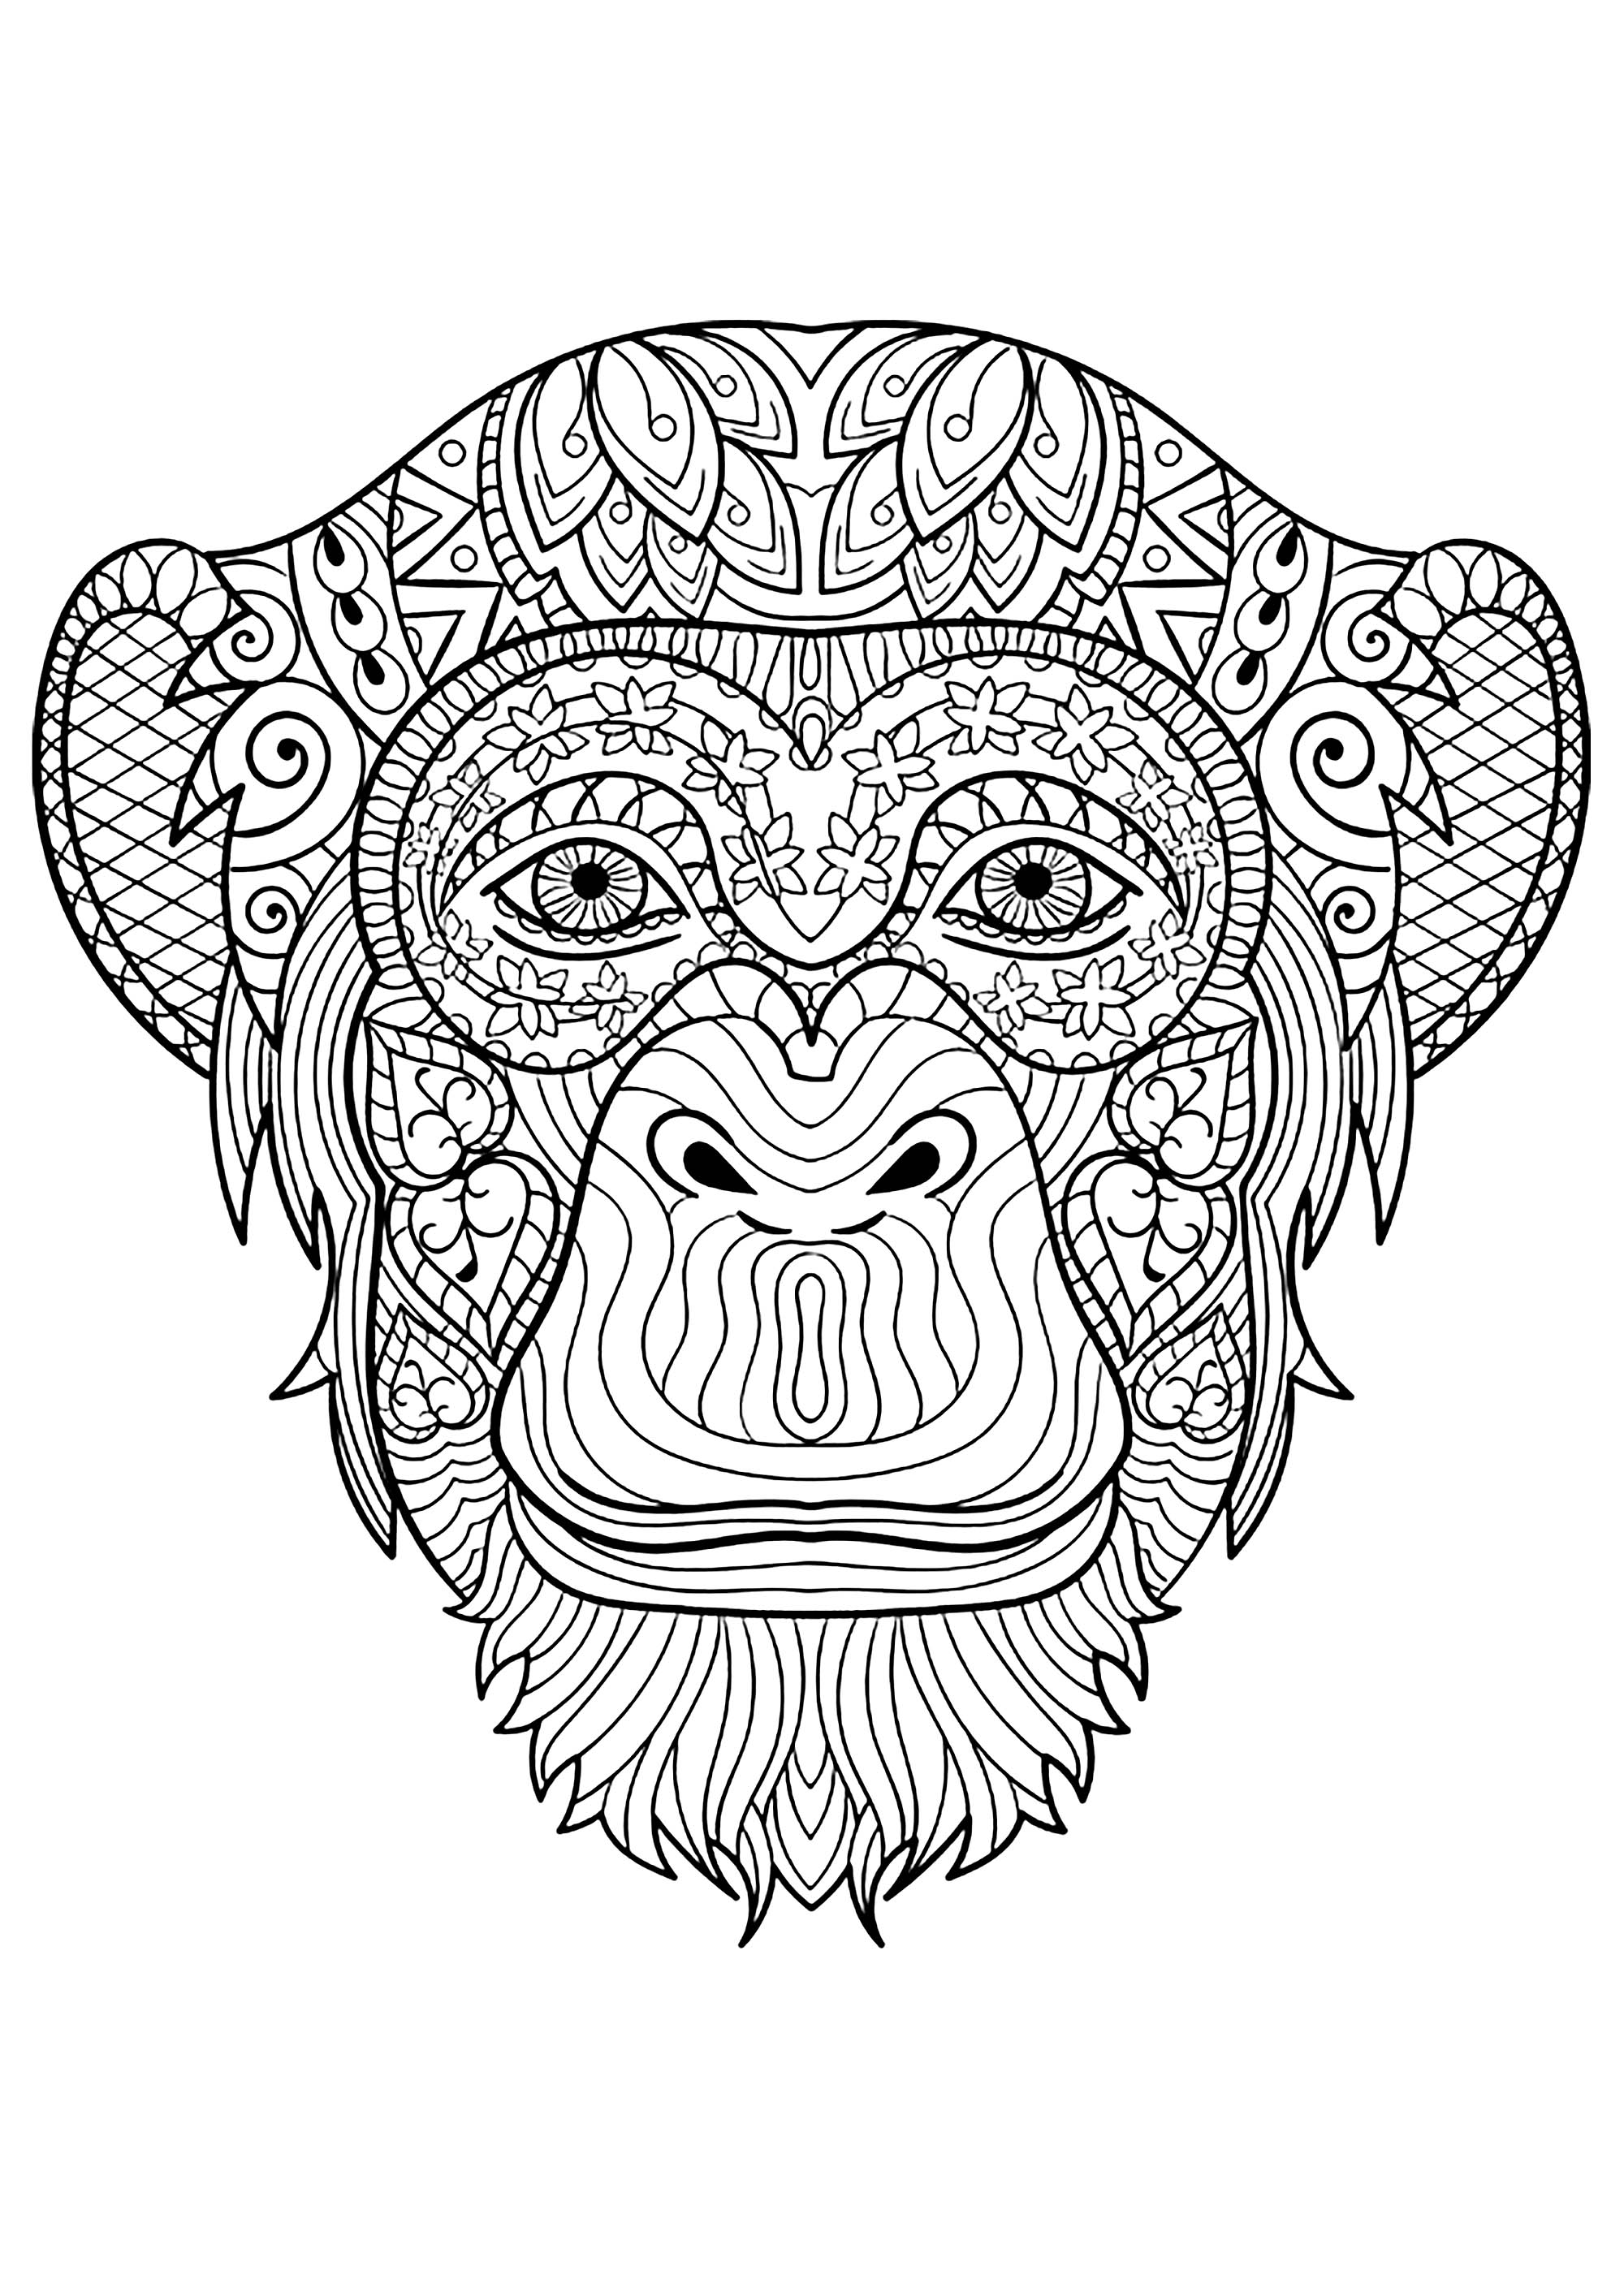 chimpanzee coloring page